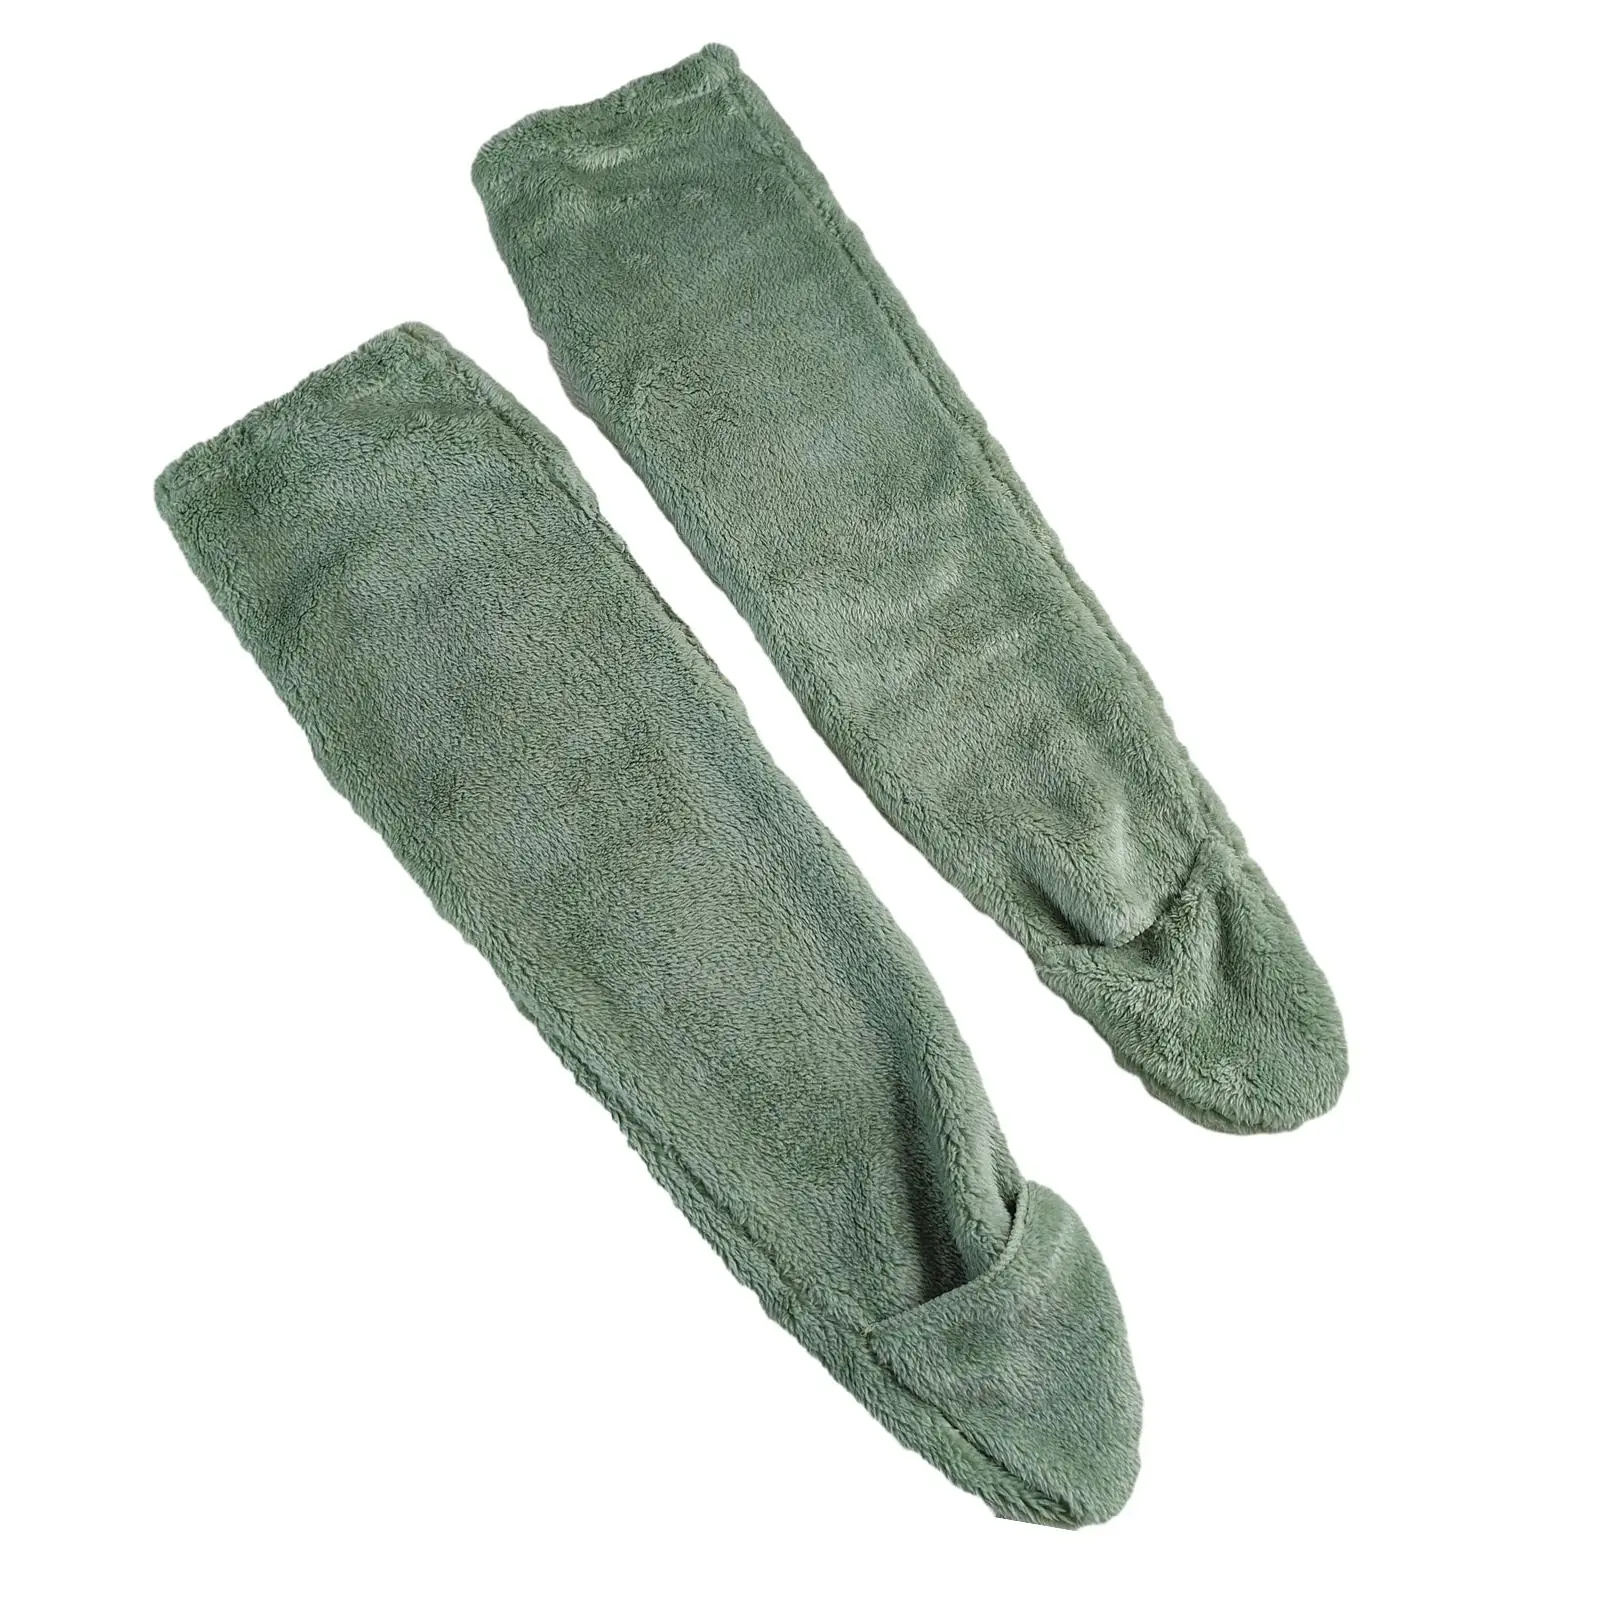 Knee High Fuzzy Socks Plush Slipper Stockings Long Leg Warmers Winter Home Sleeping Socks